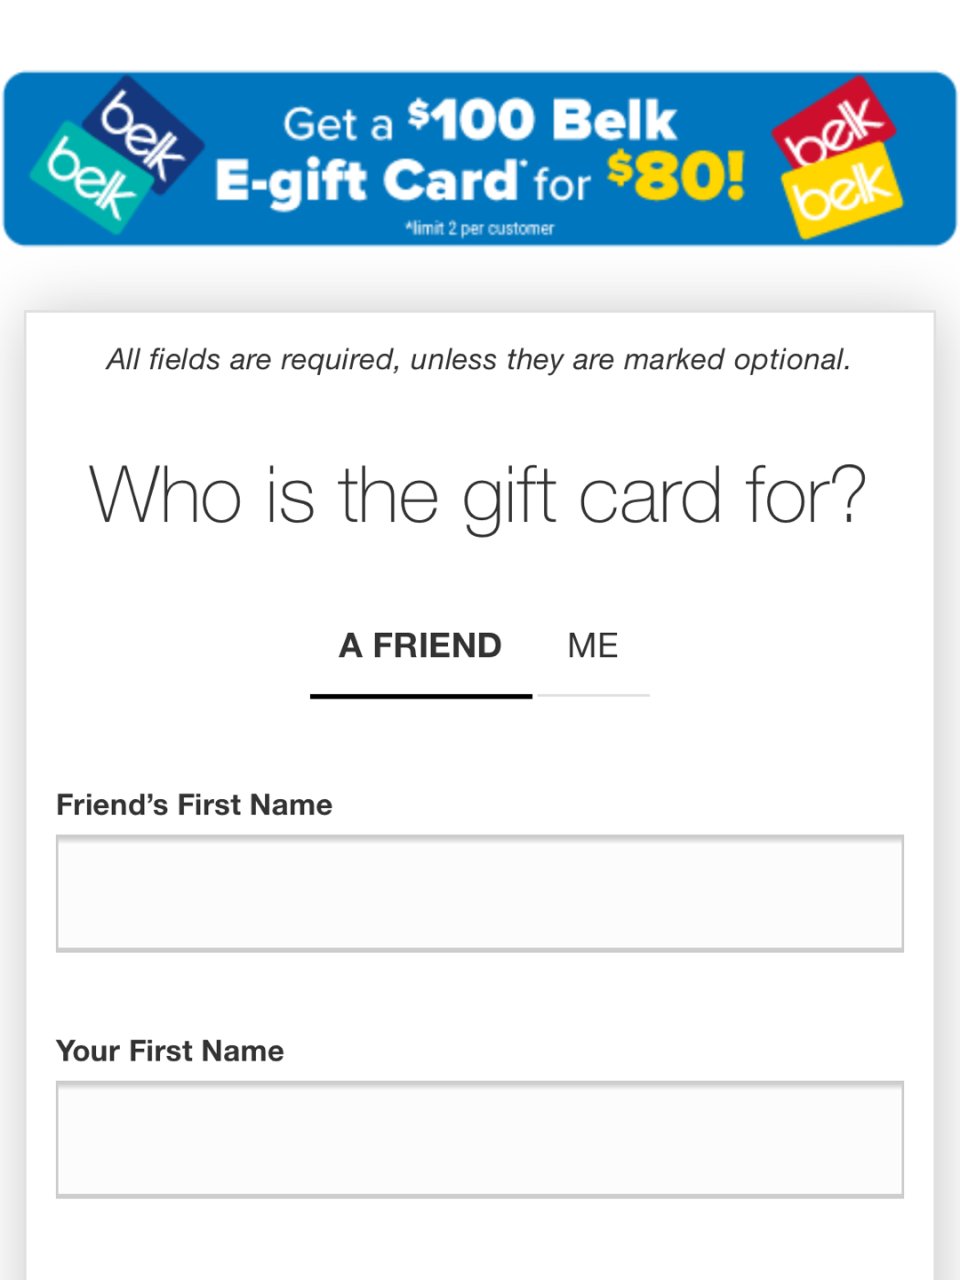 Belk Gift Cards by CashStar